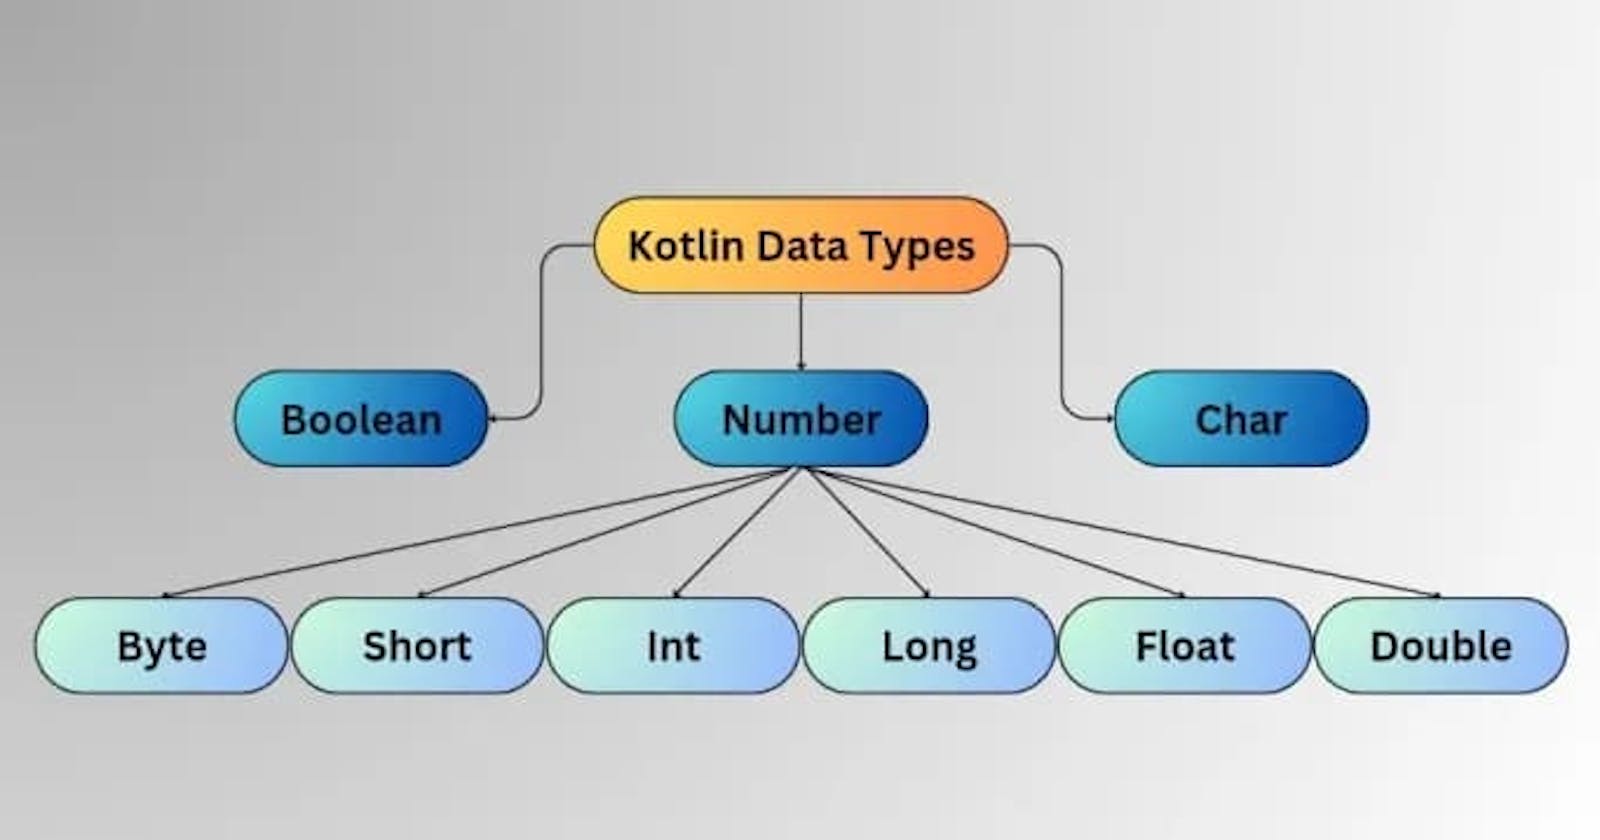 Does Kotlin have primitive data types?